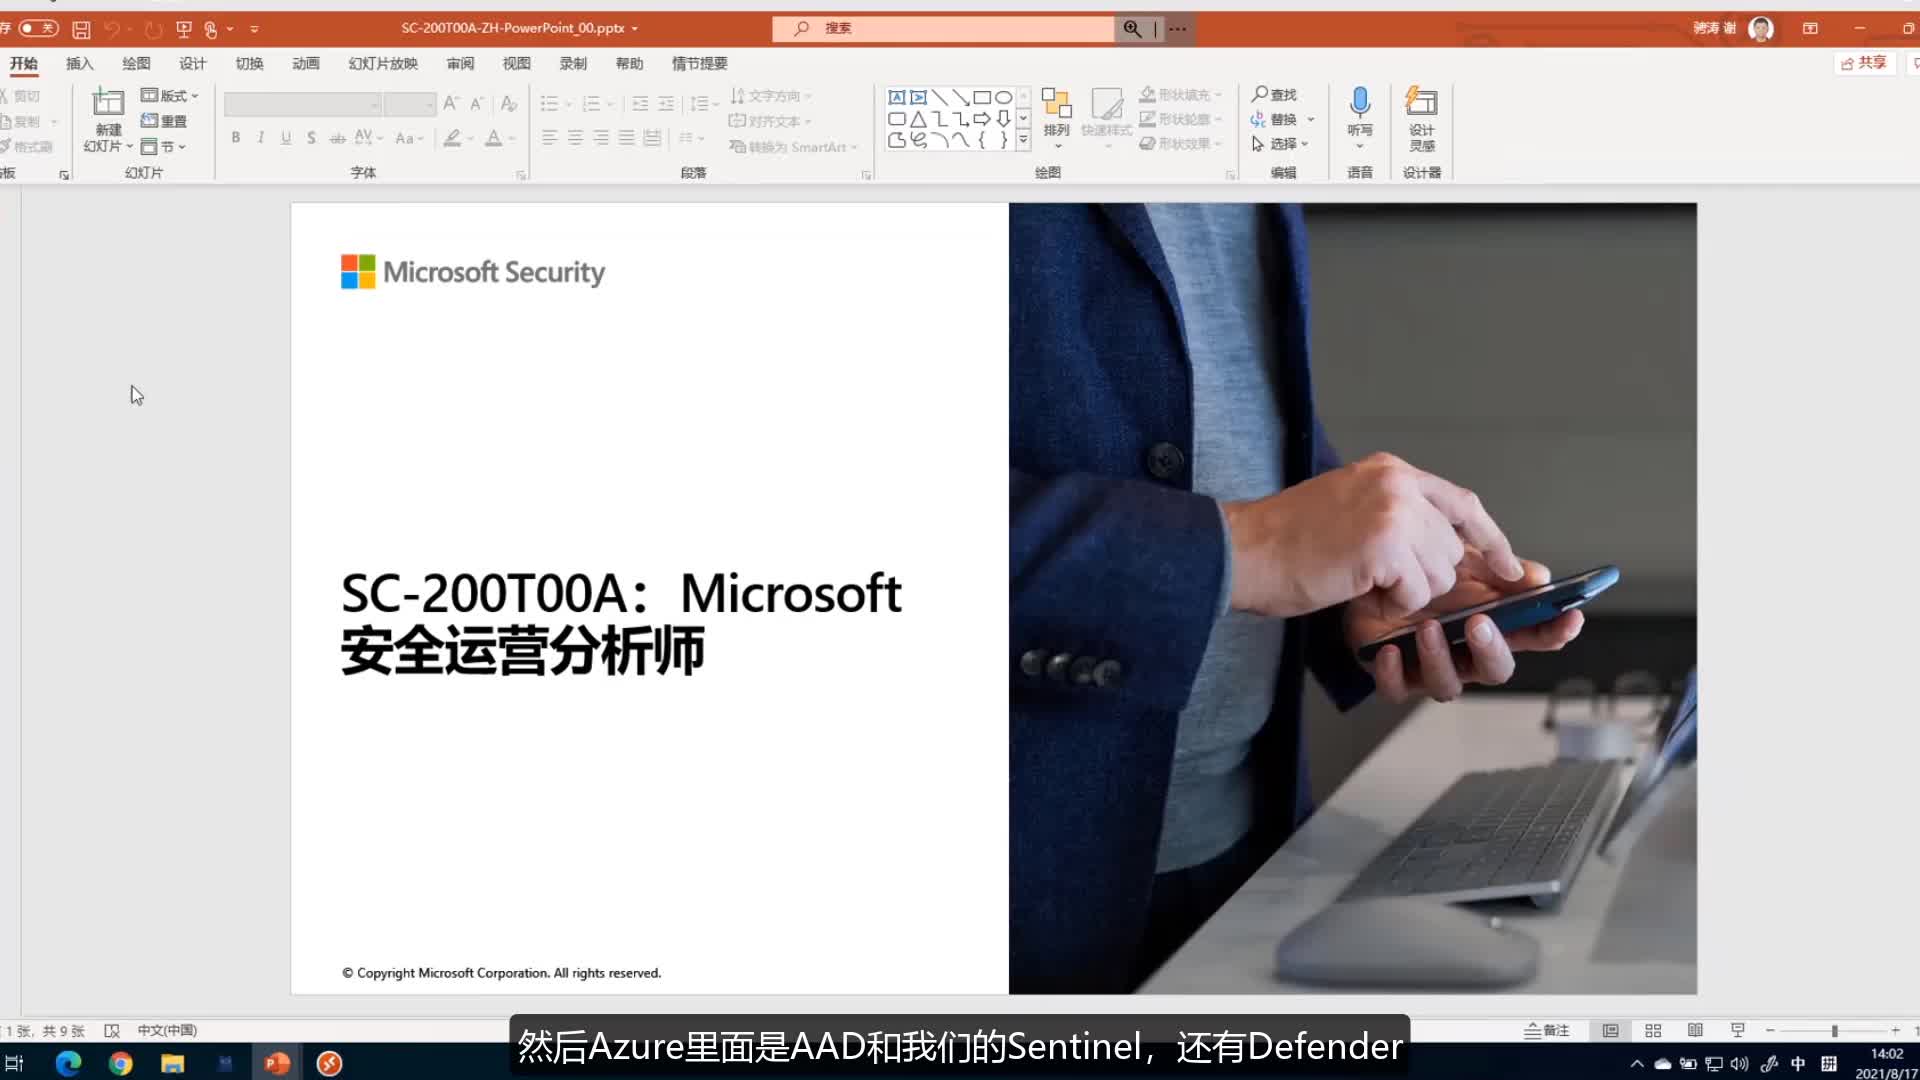 SC-200: Microsoft Security Operatio